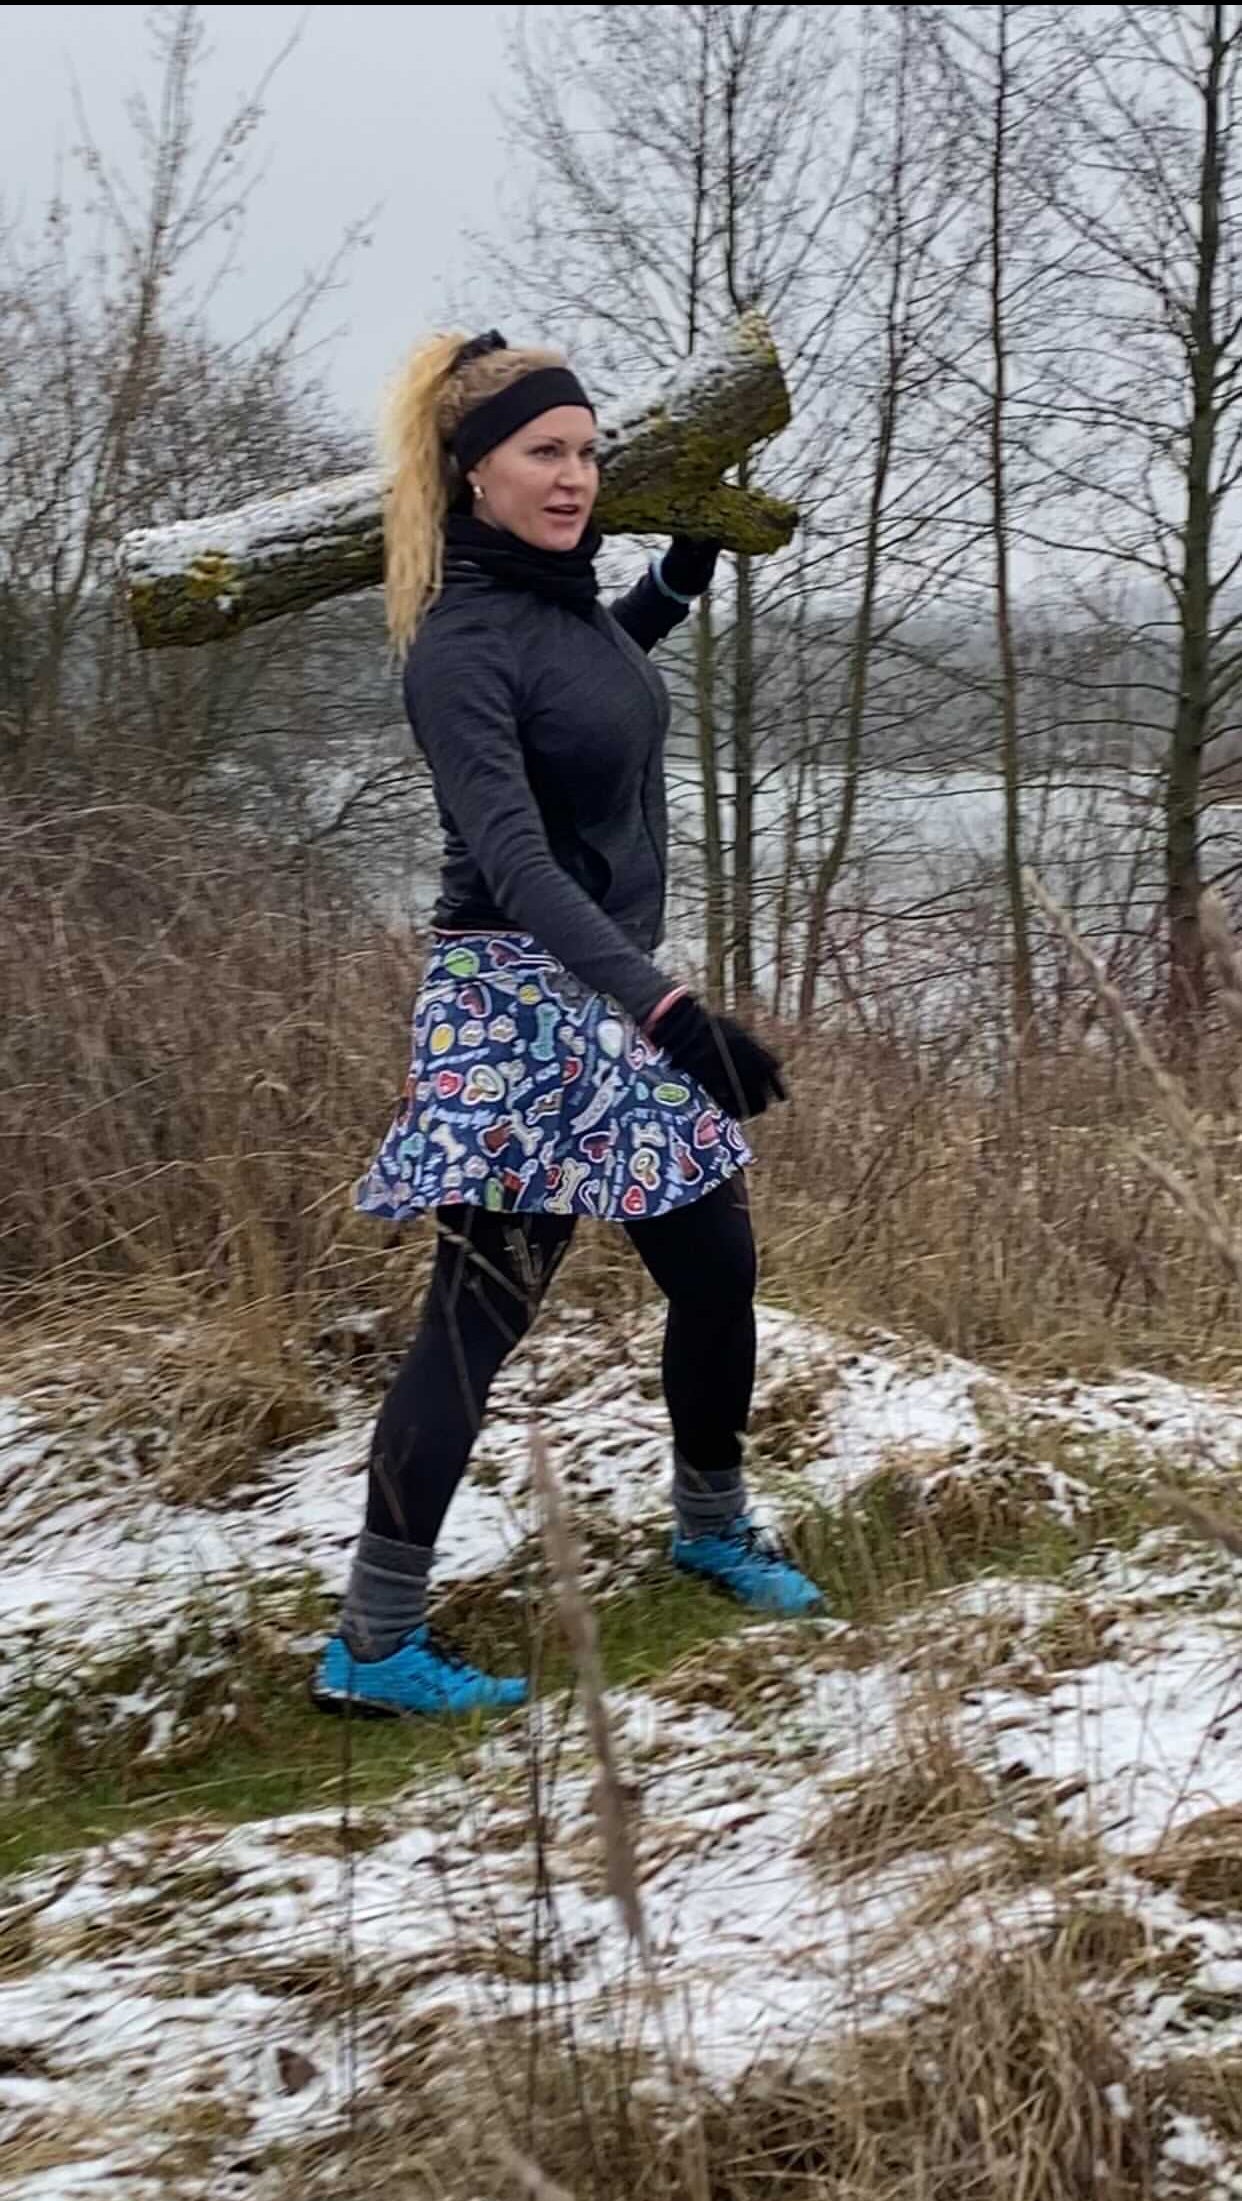 Samantha outside carrying a log wearing a Bolder skirt